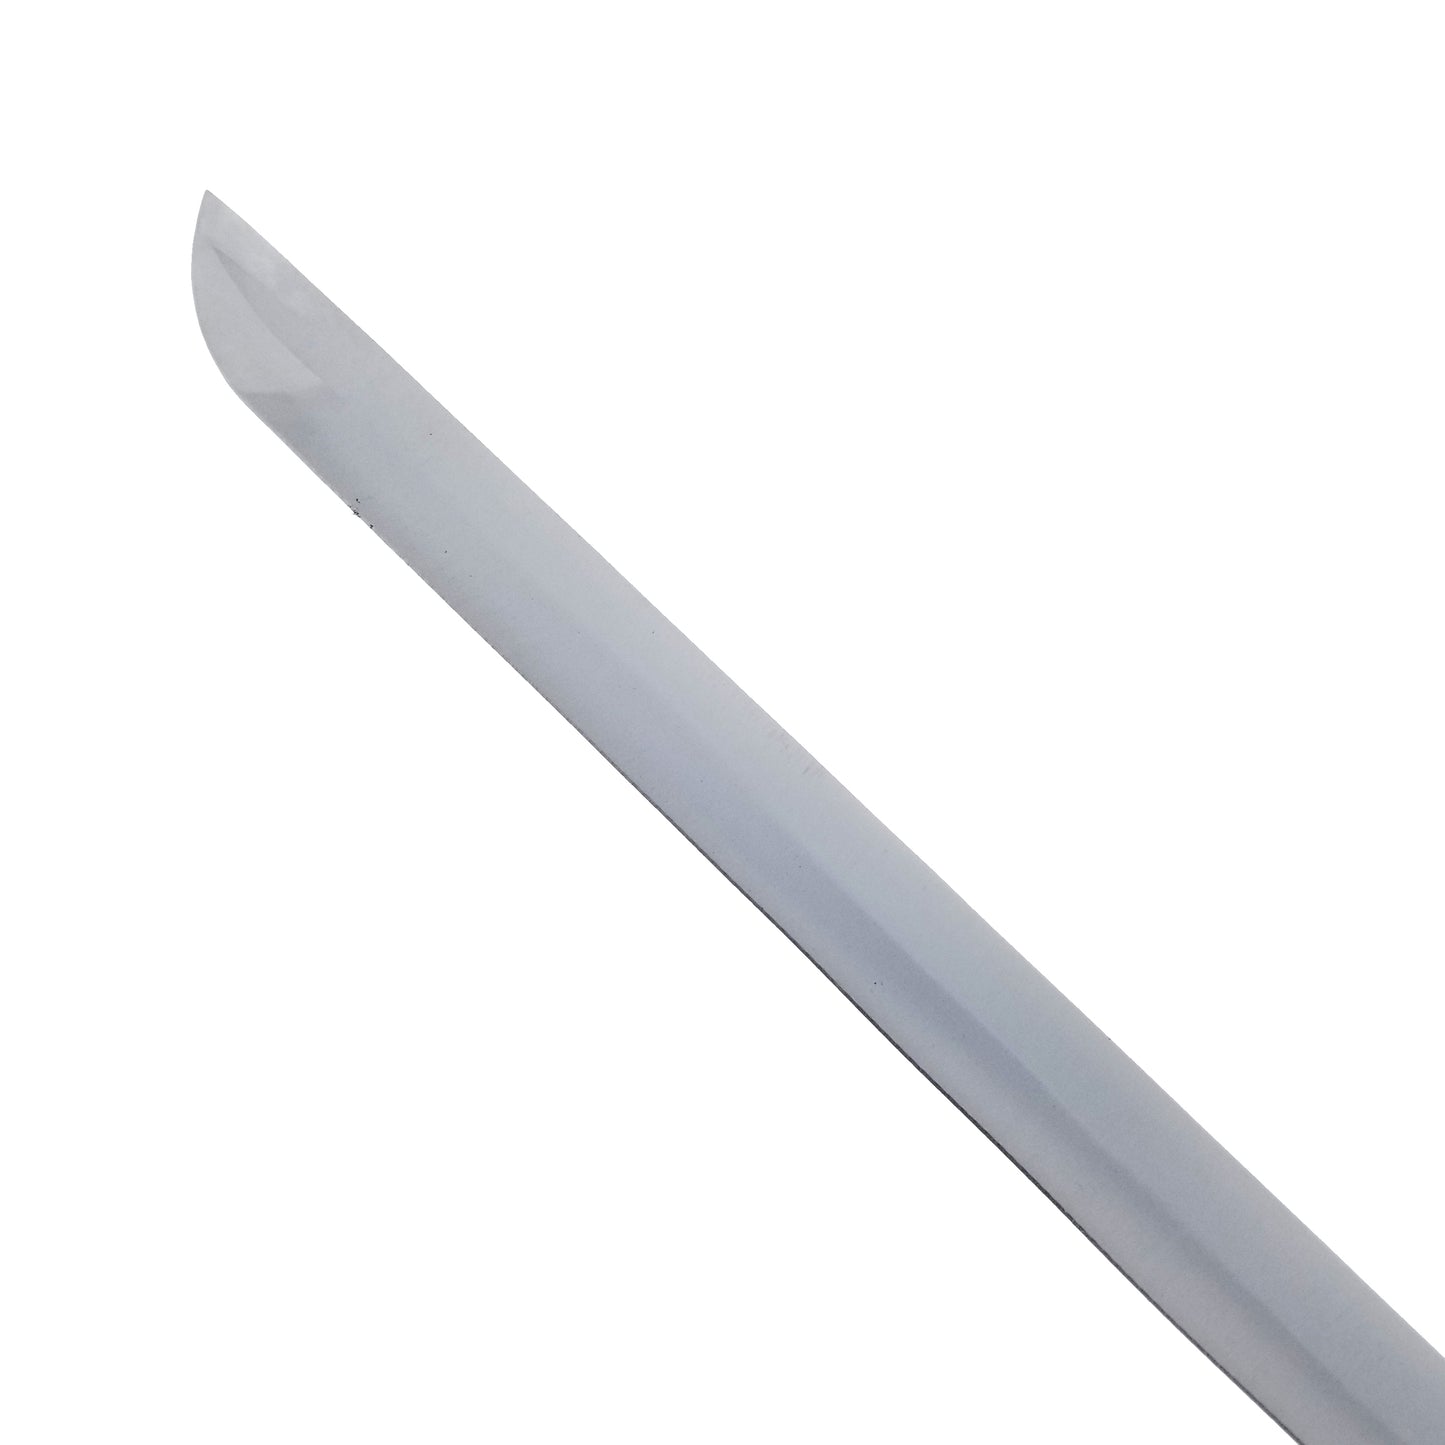 36.25" Dragon Sword